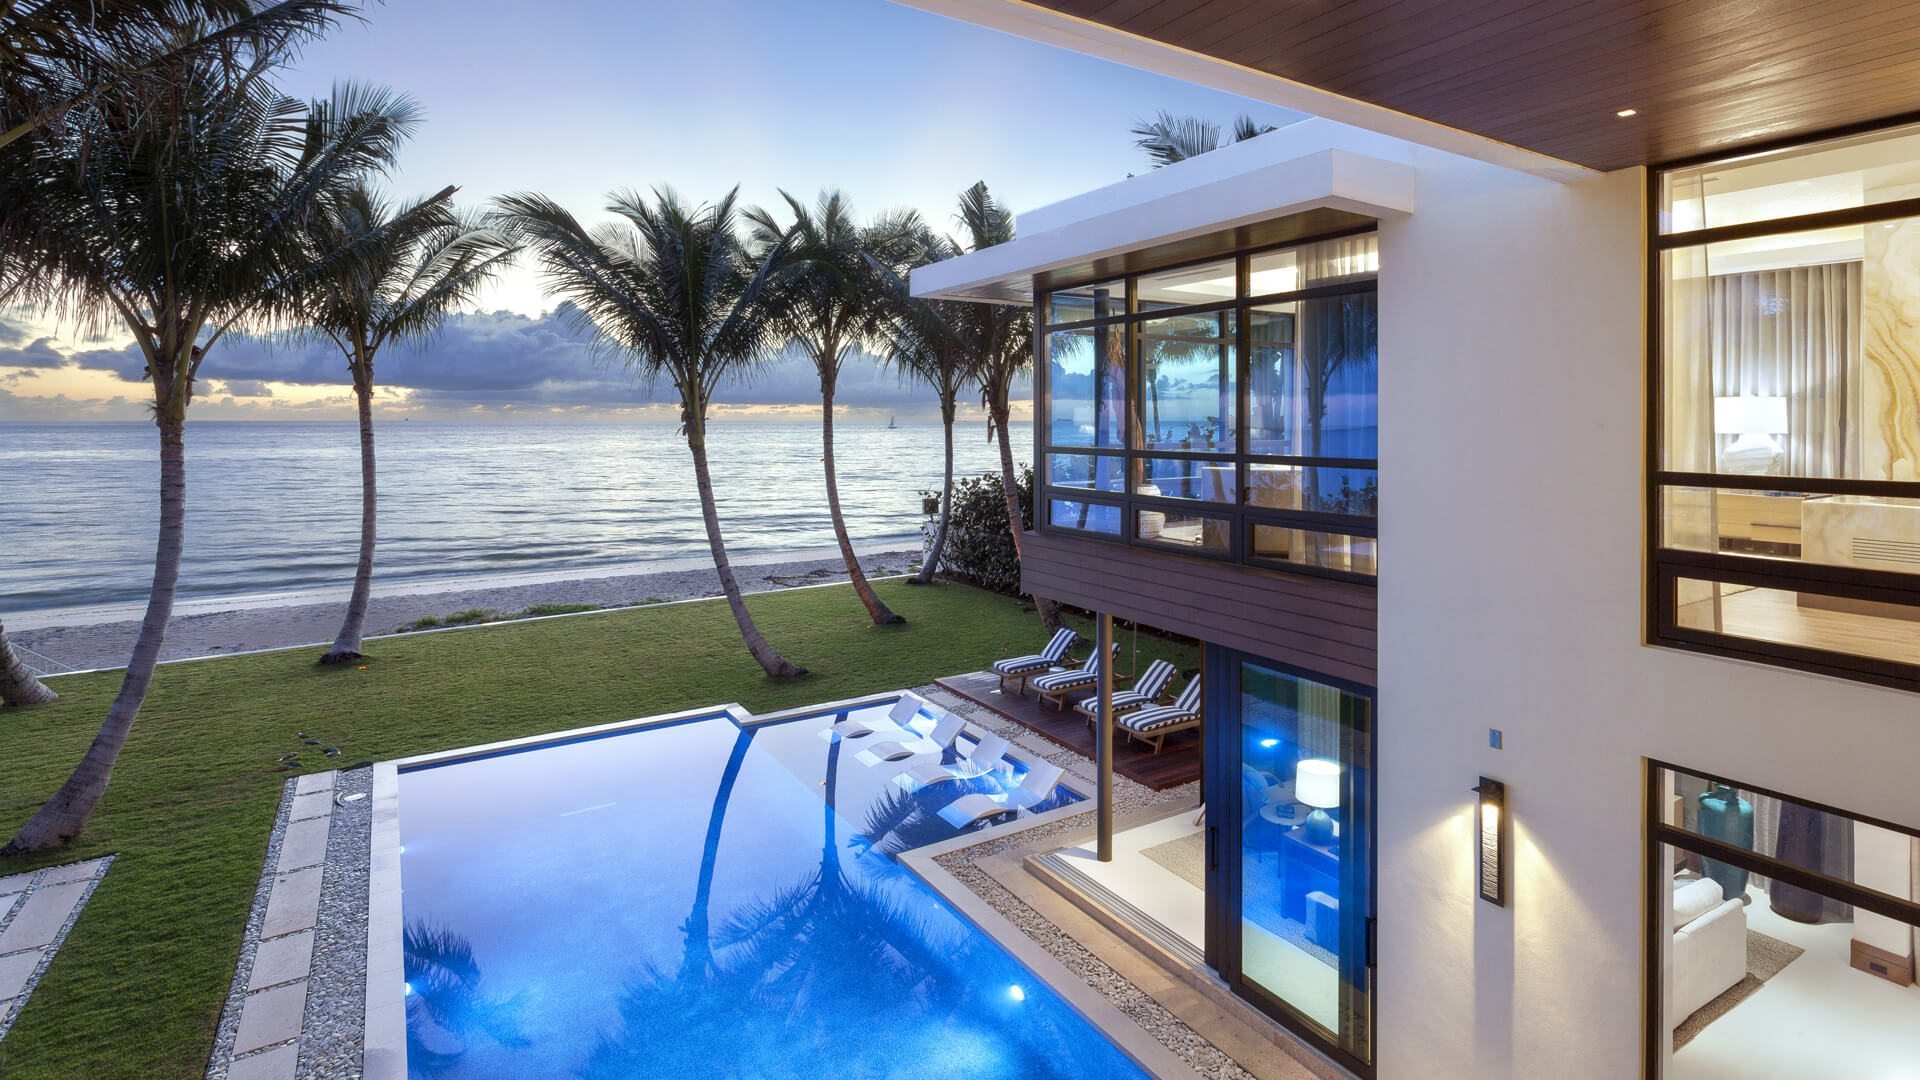 Marc Thee's 6 Ocean Modern Design Home